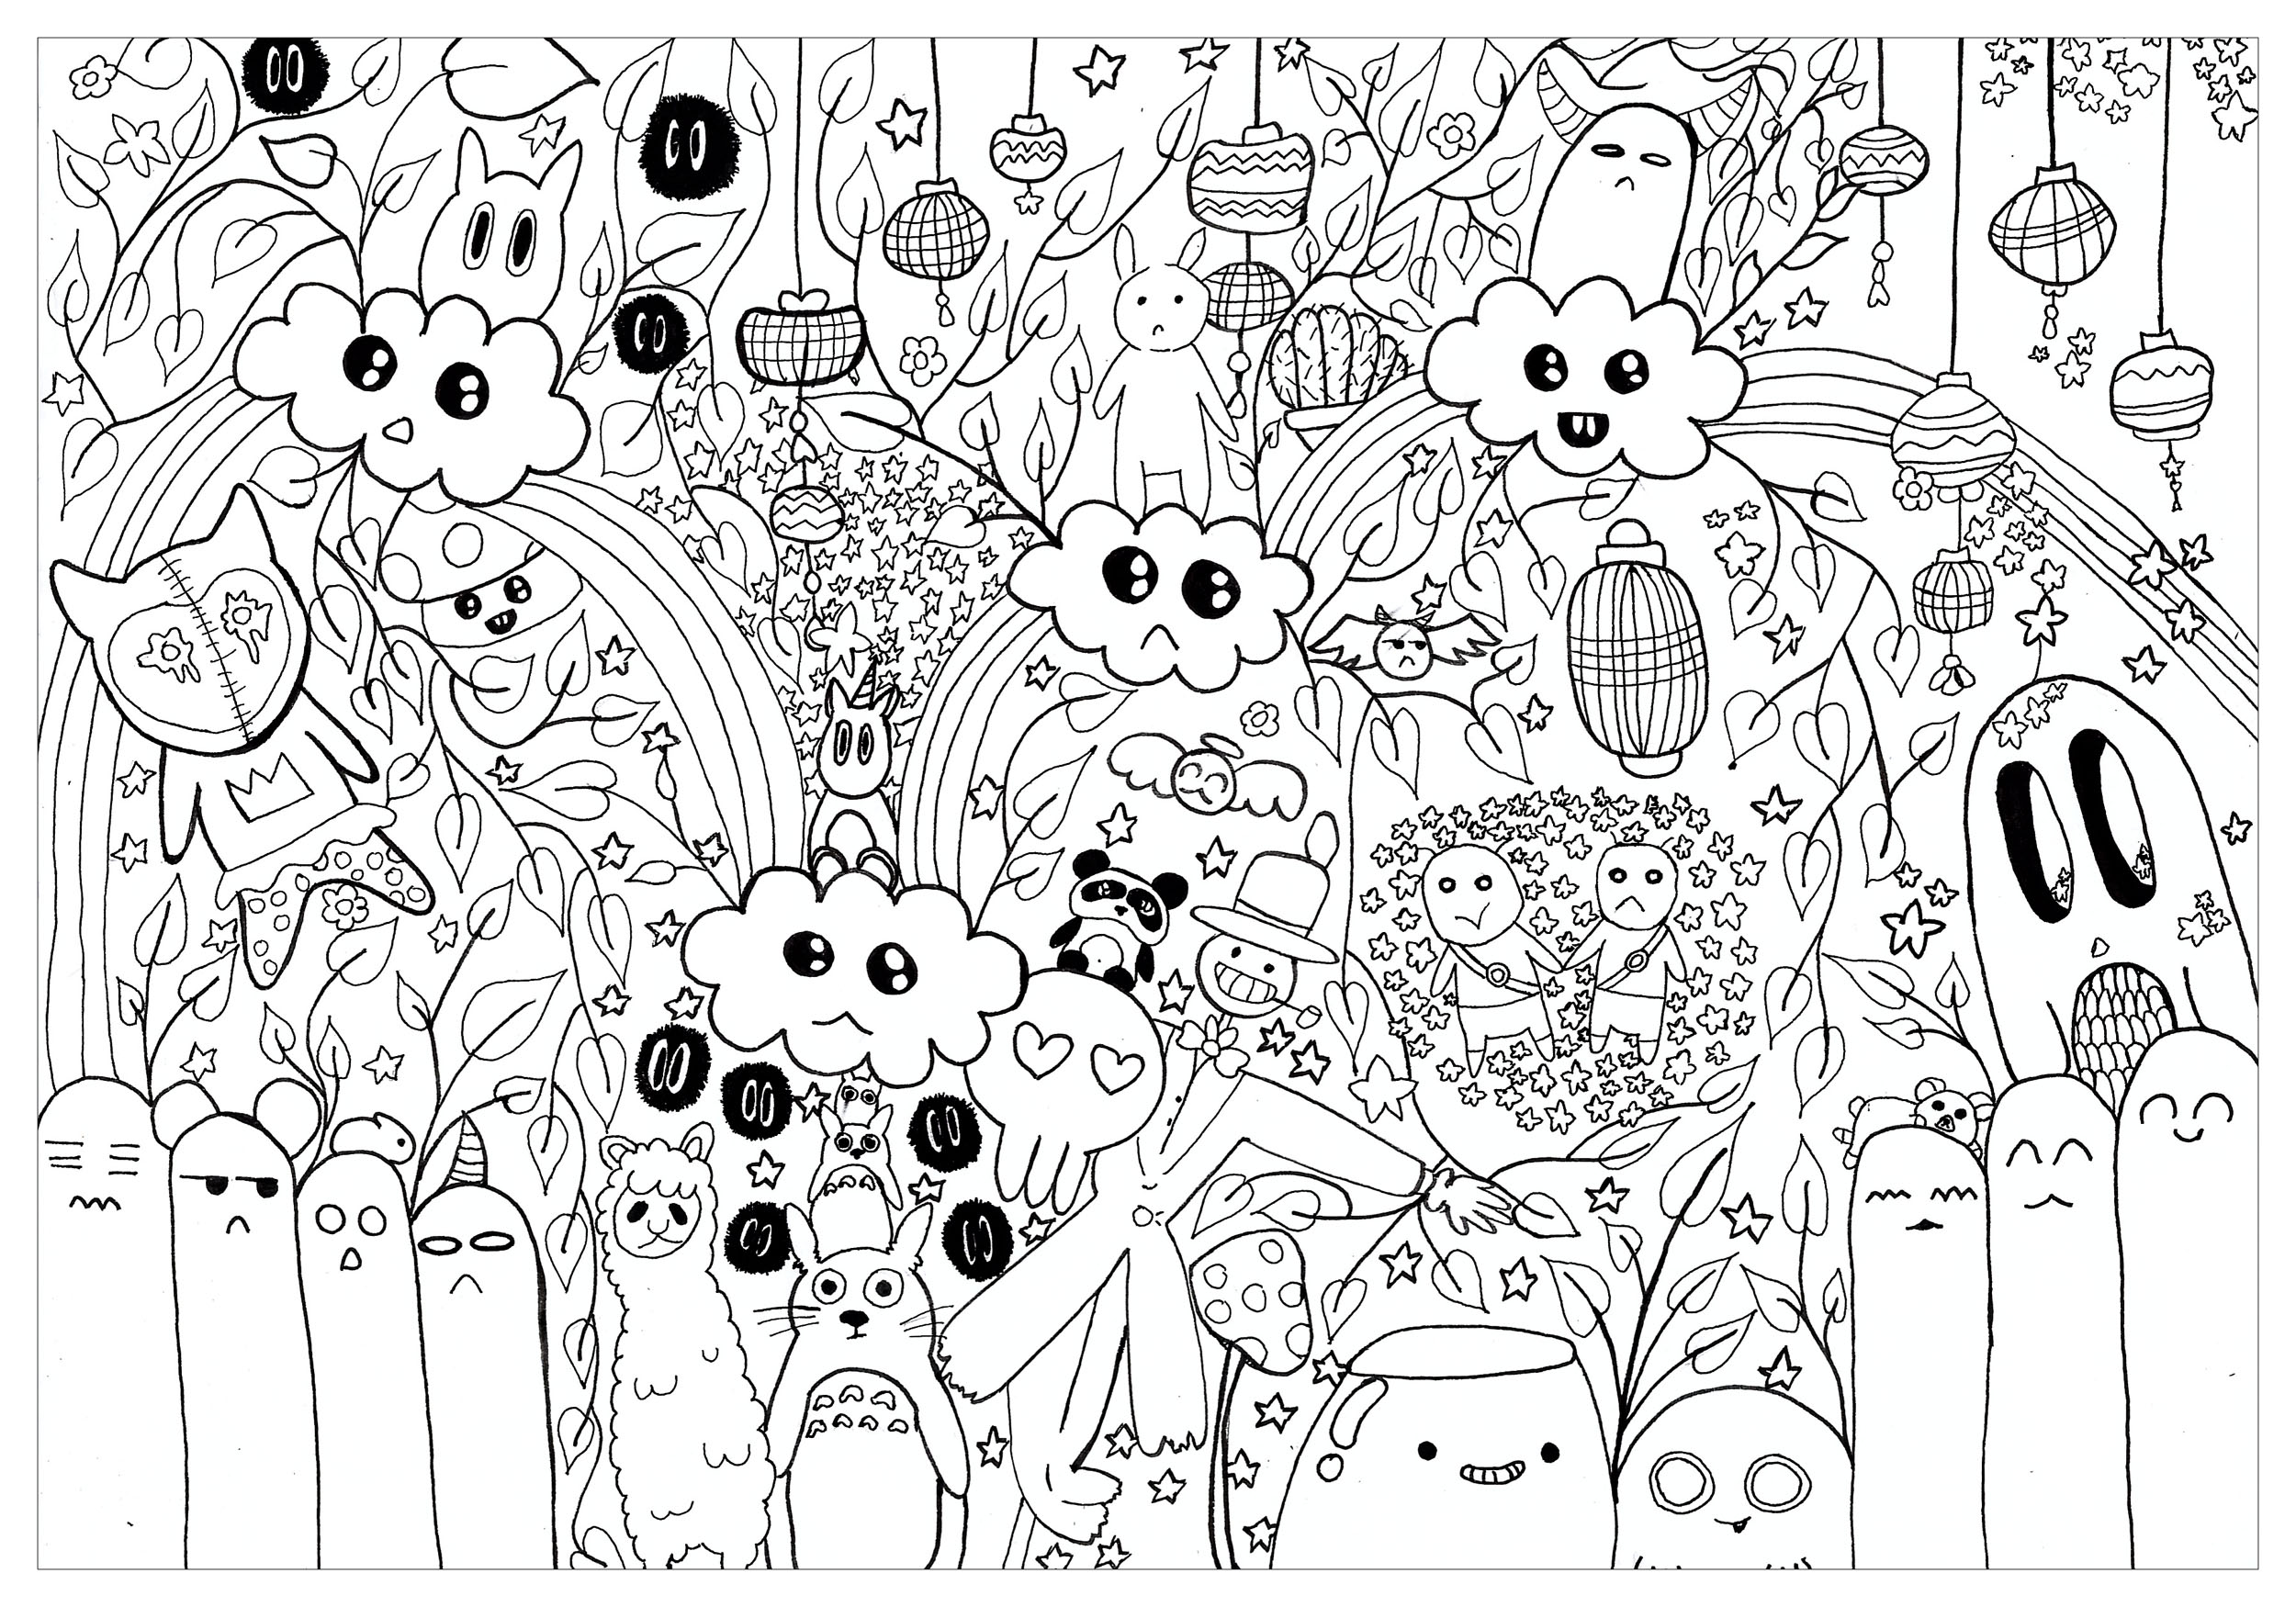 Doodle : Totoro